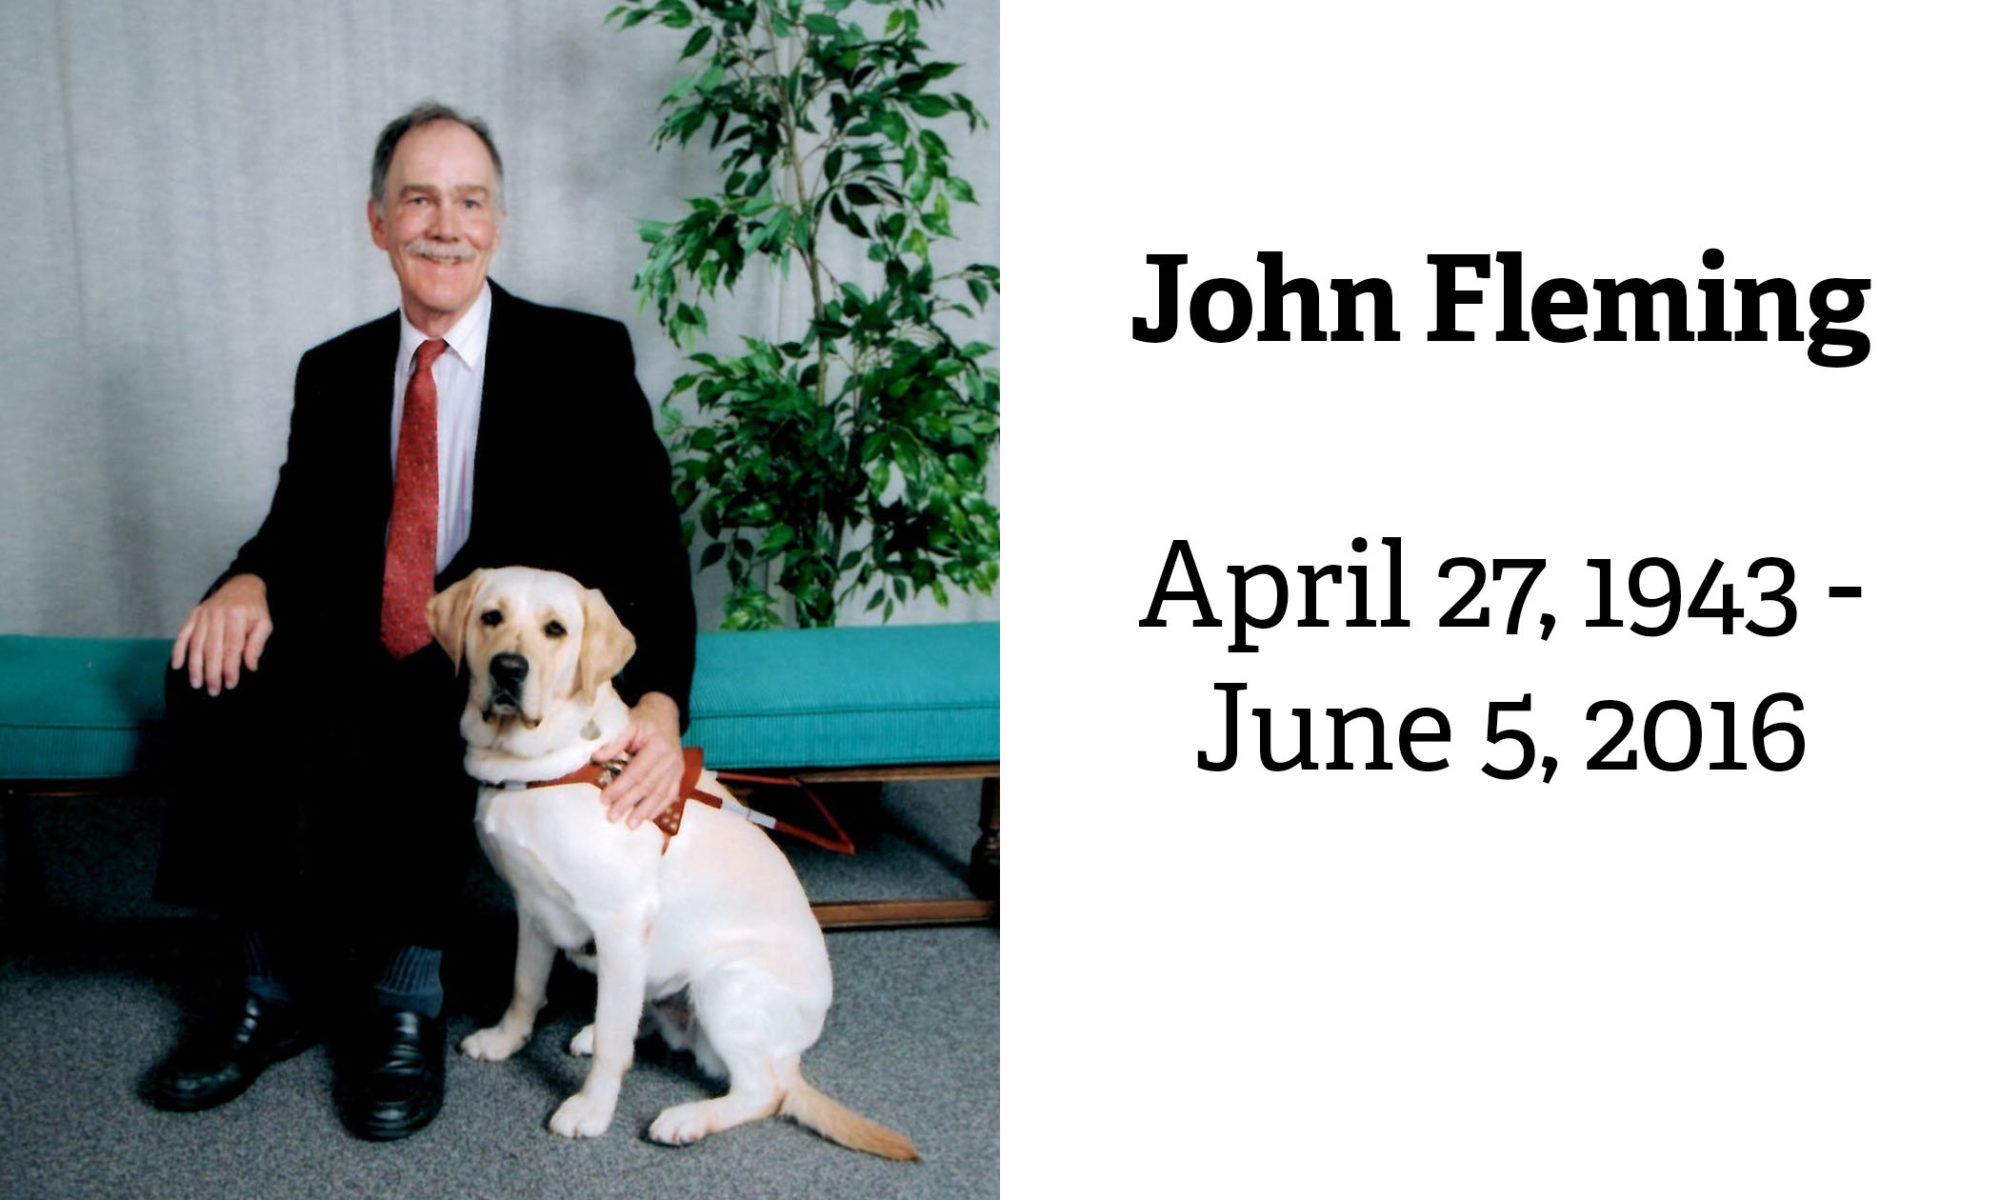 John Fleming seated next to his guide dog Tia. The caption says John Fleming, April 27, 1943 - June 5, 2016.